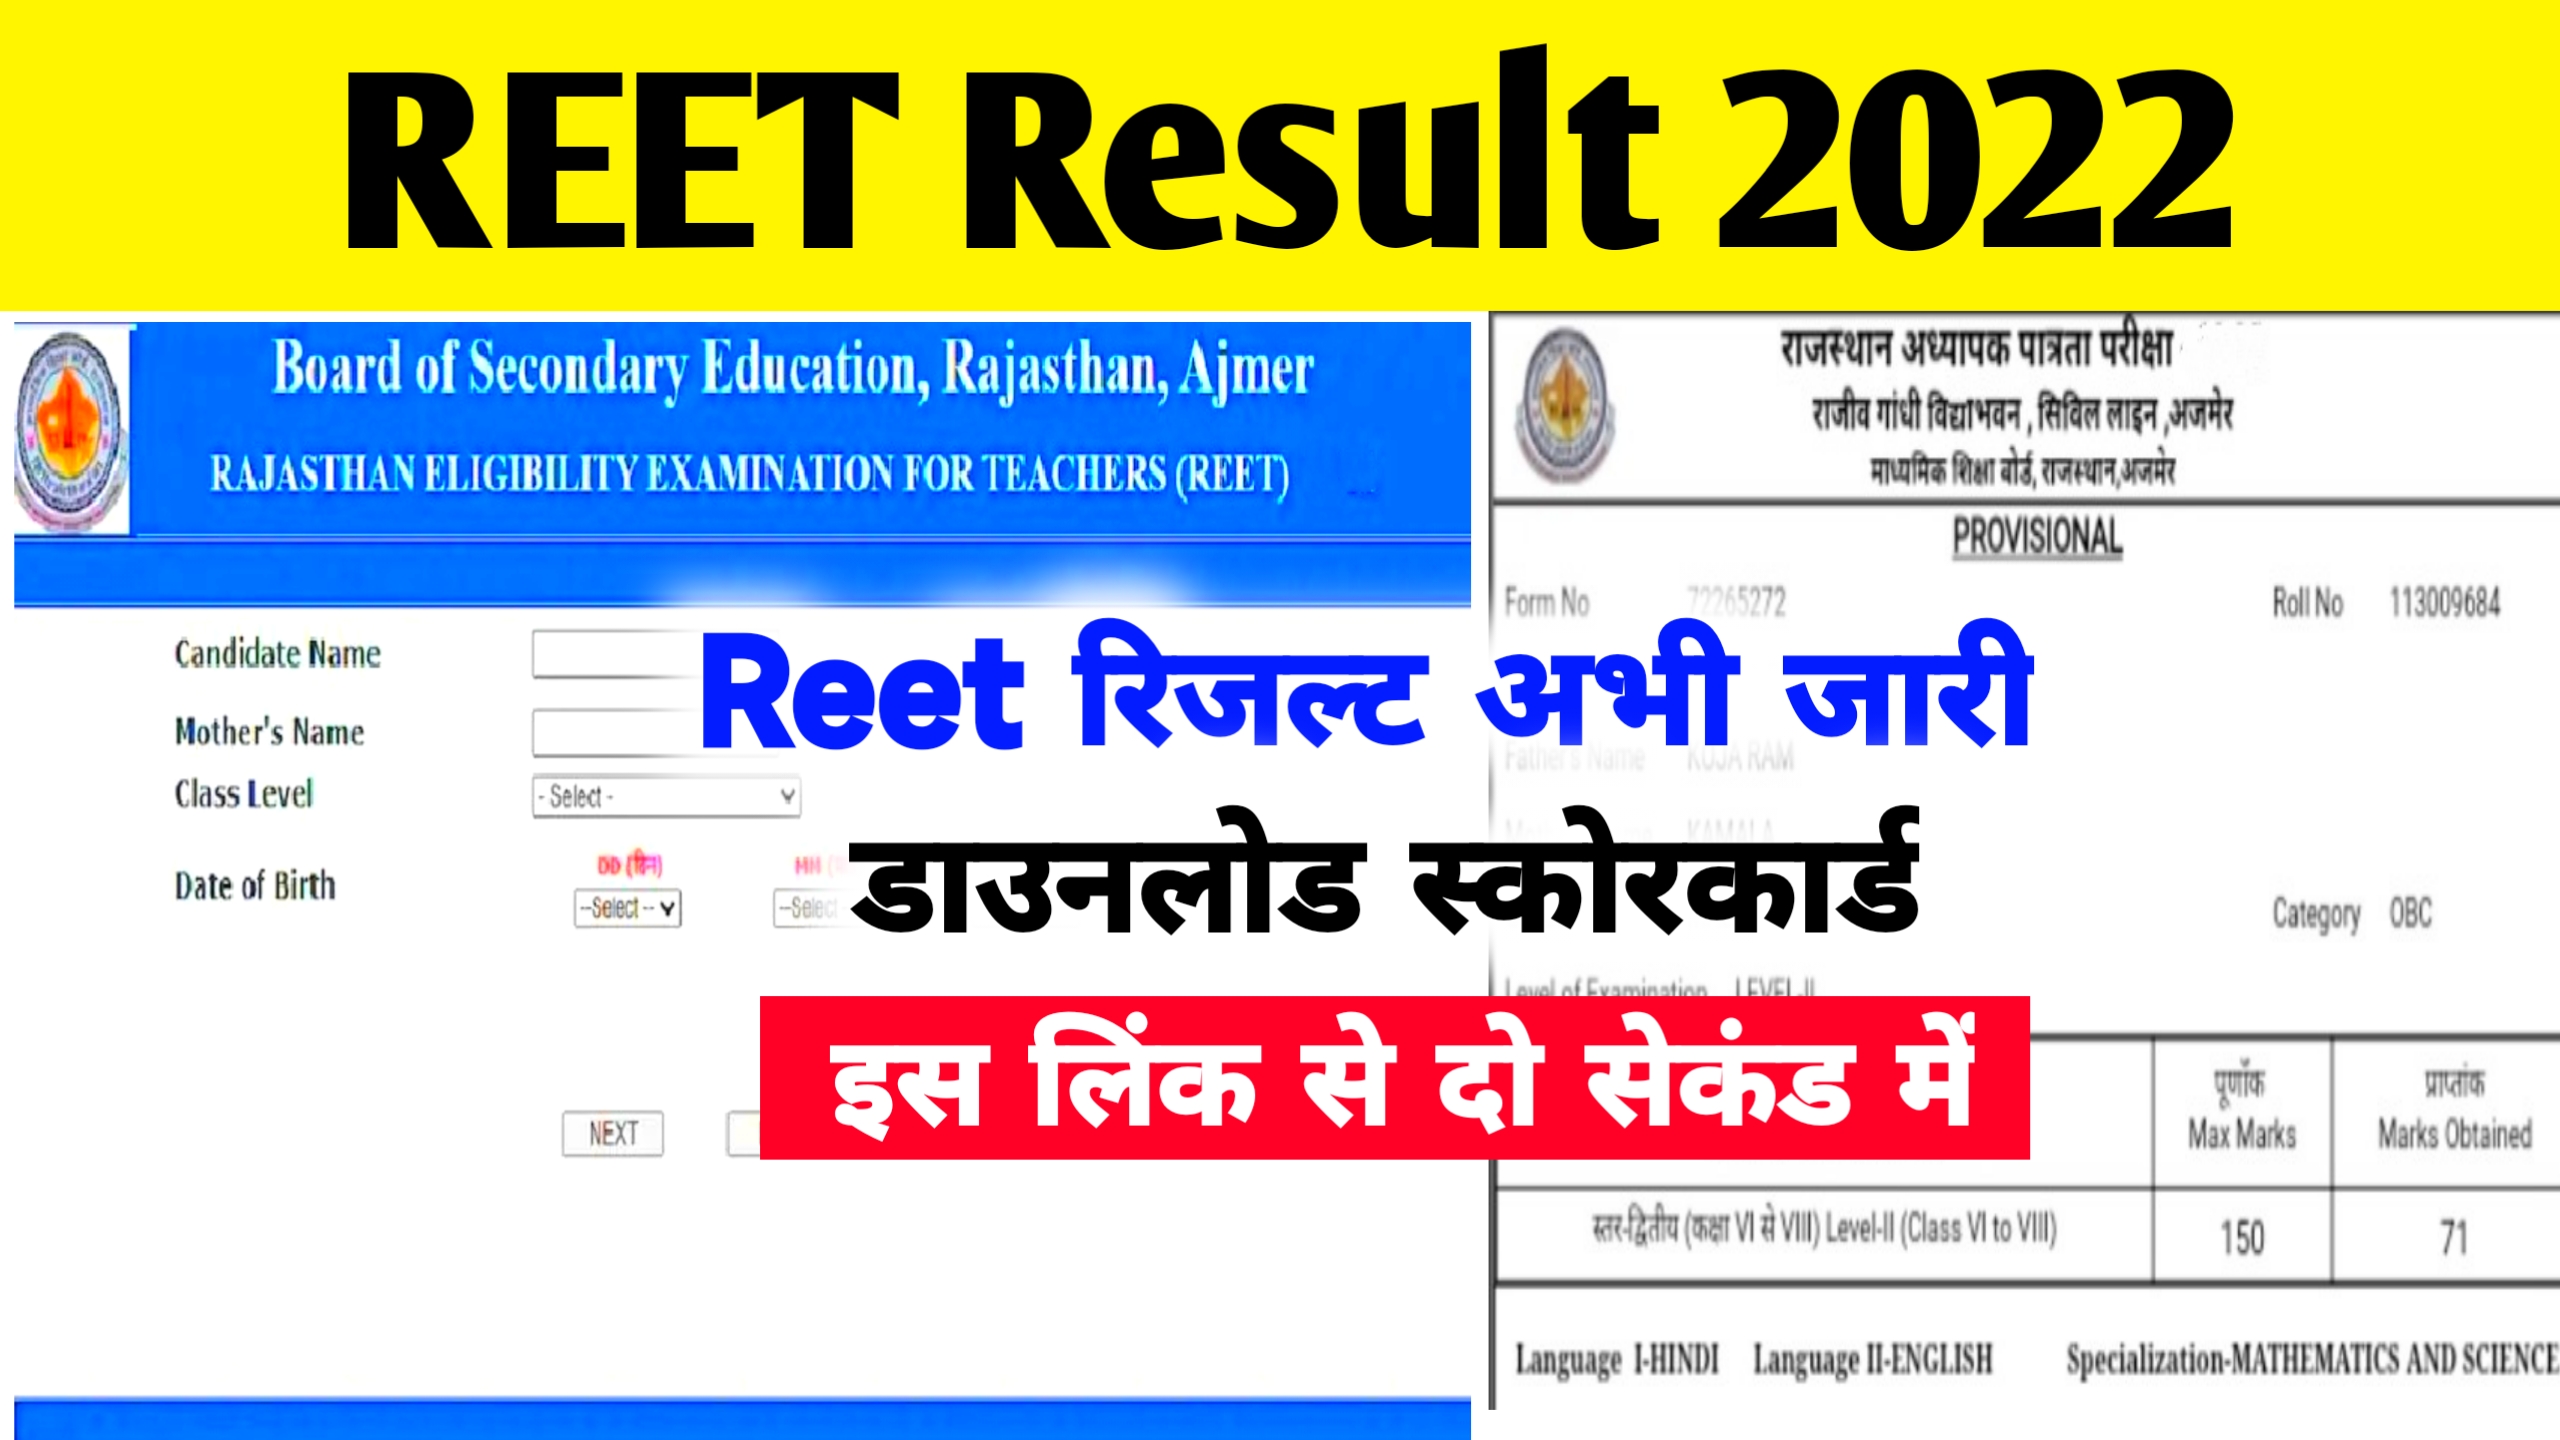 reetbser2022.in Reet Result 2022 Direct Link ~ Download Reet Scorecard